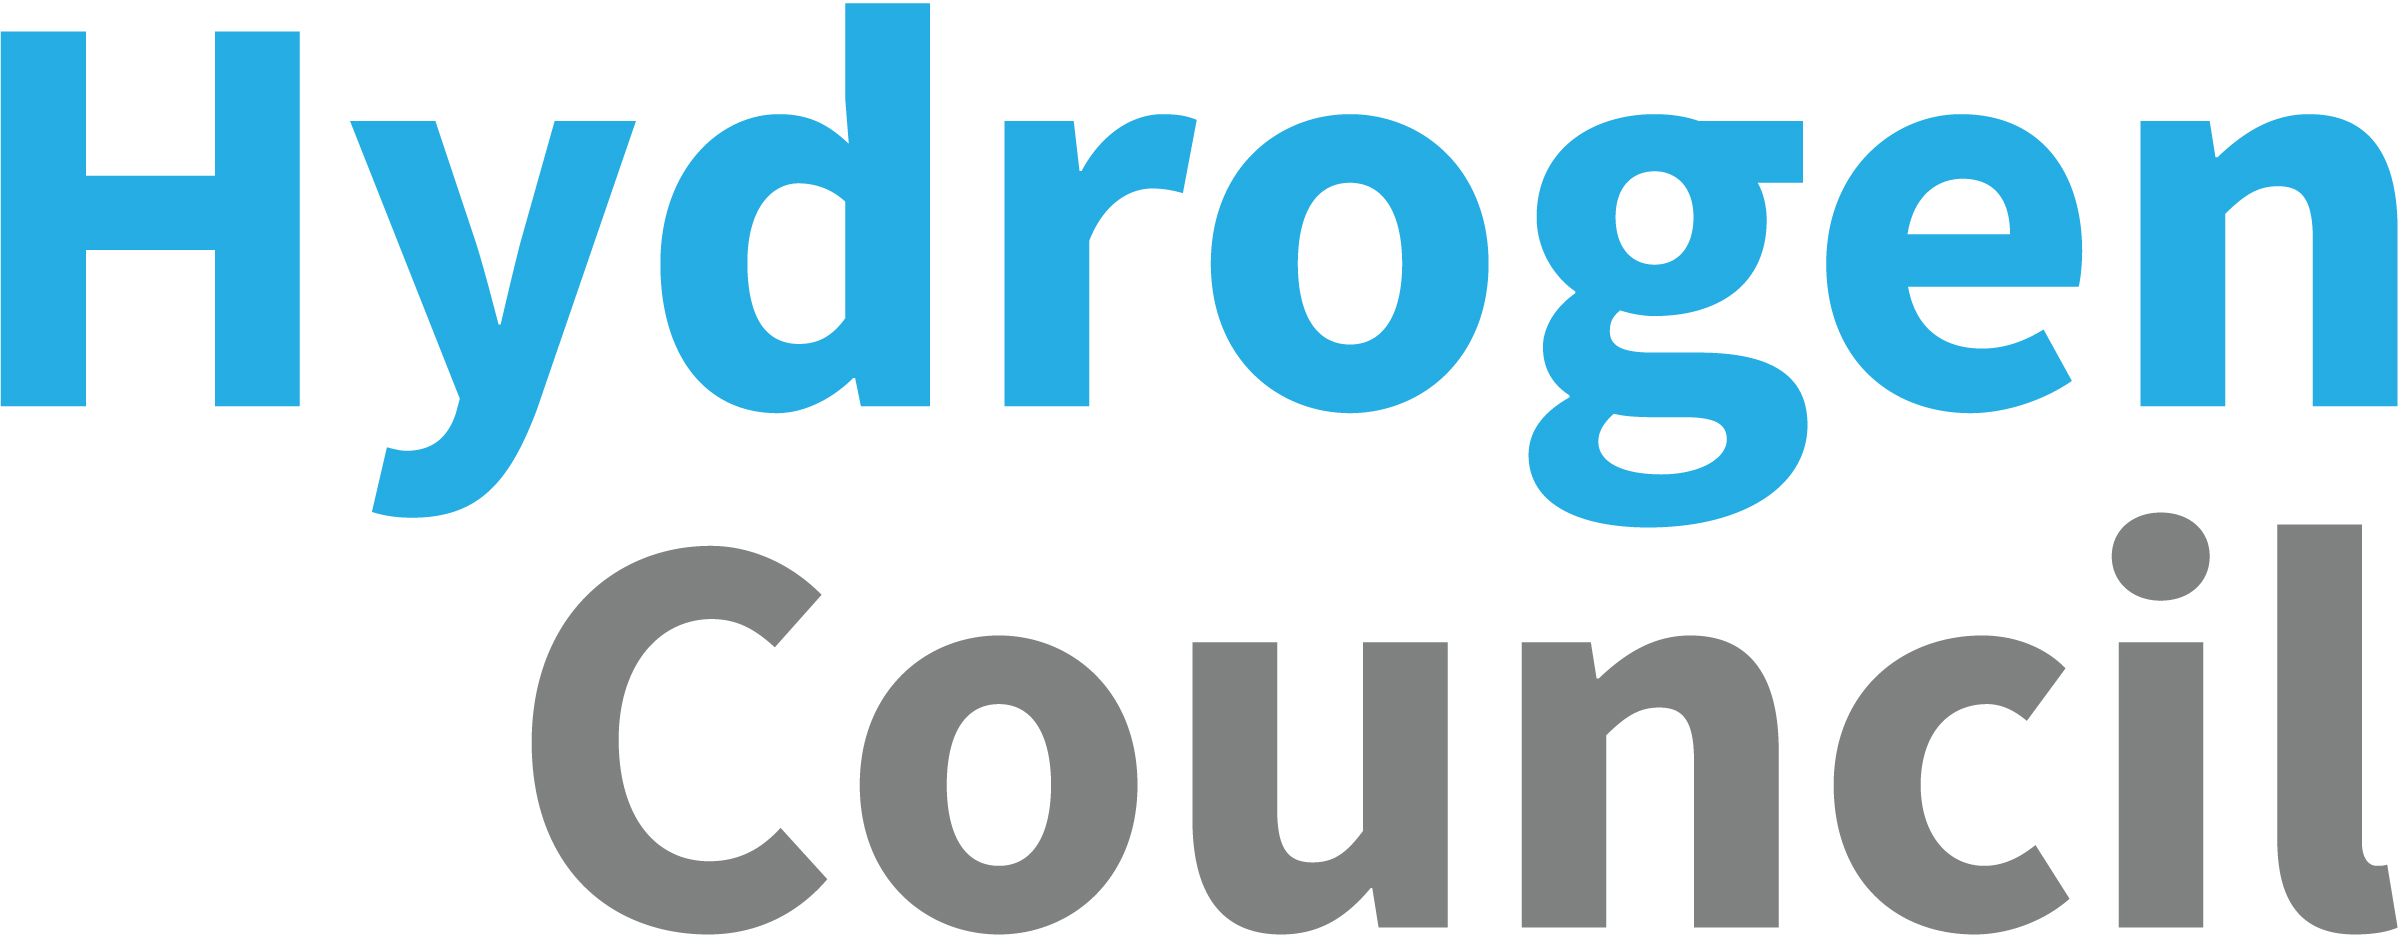 Hydrogencouncil Logo Stacked